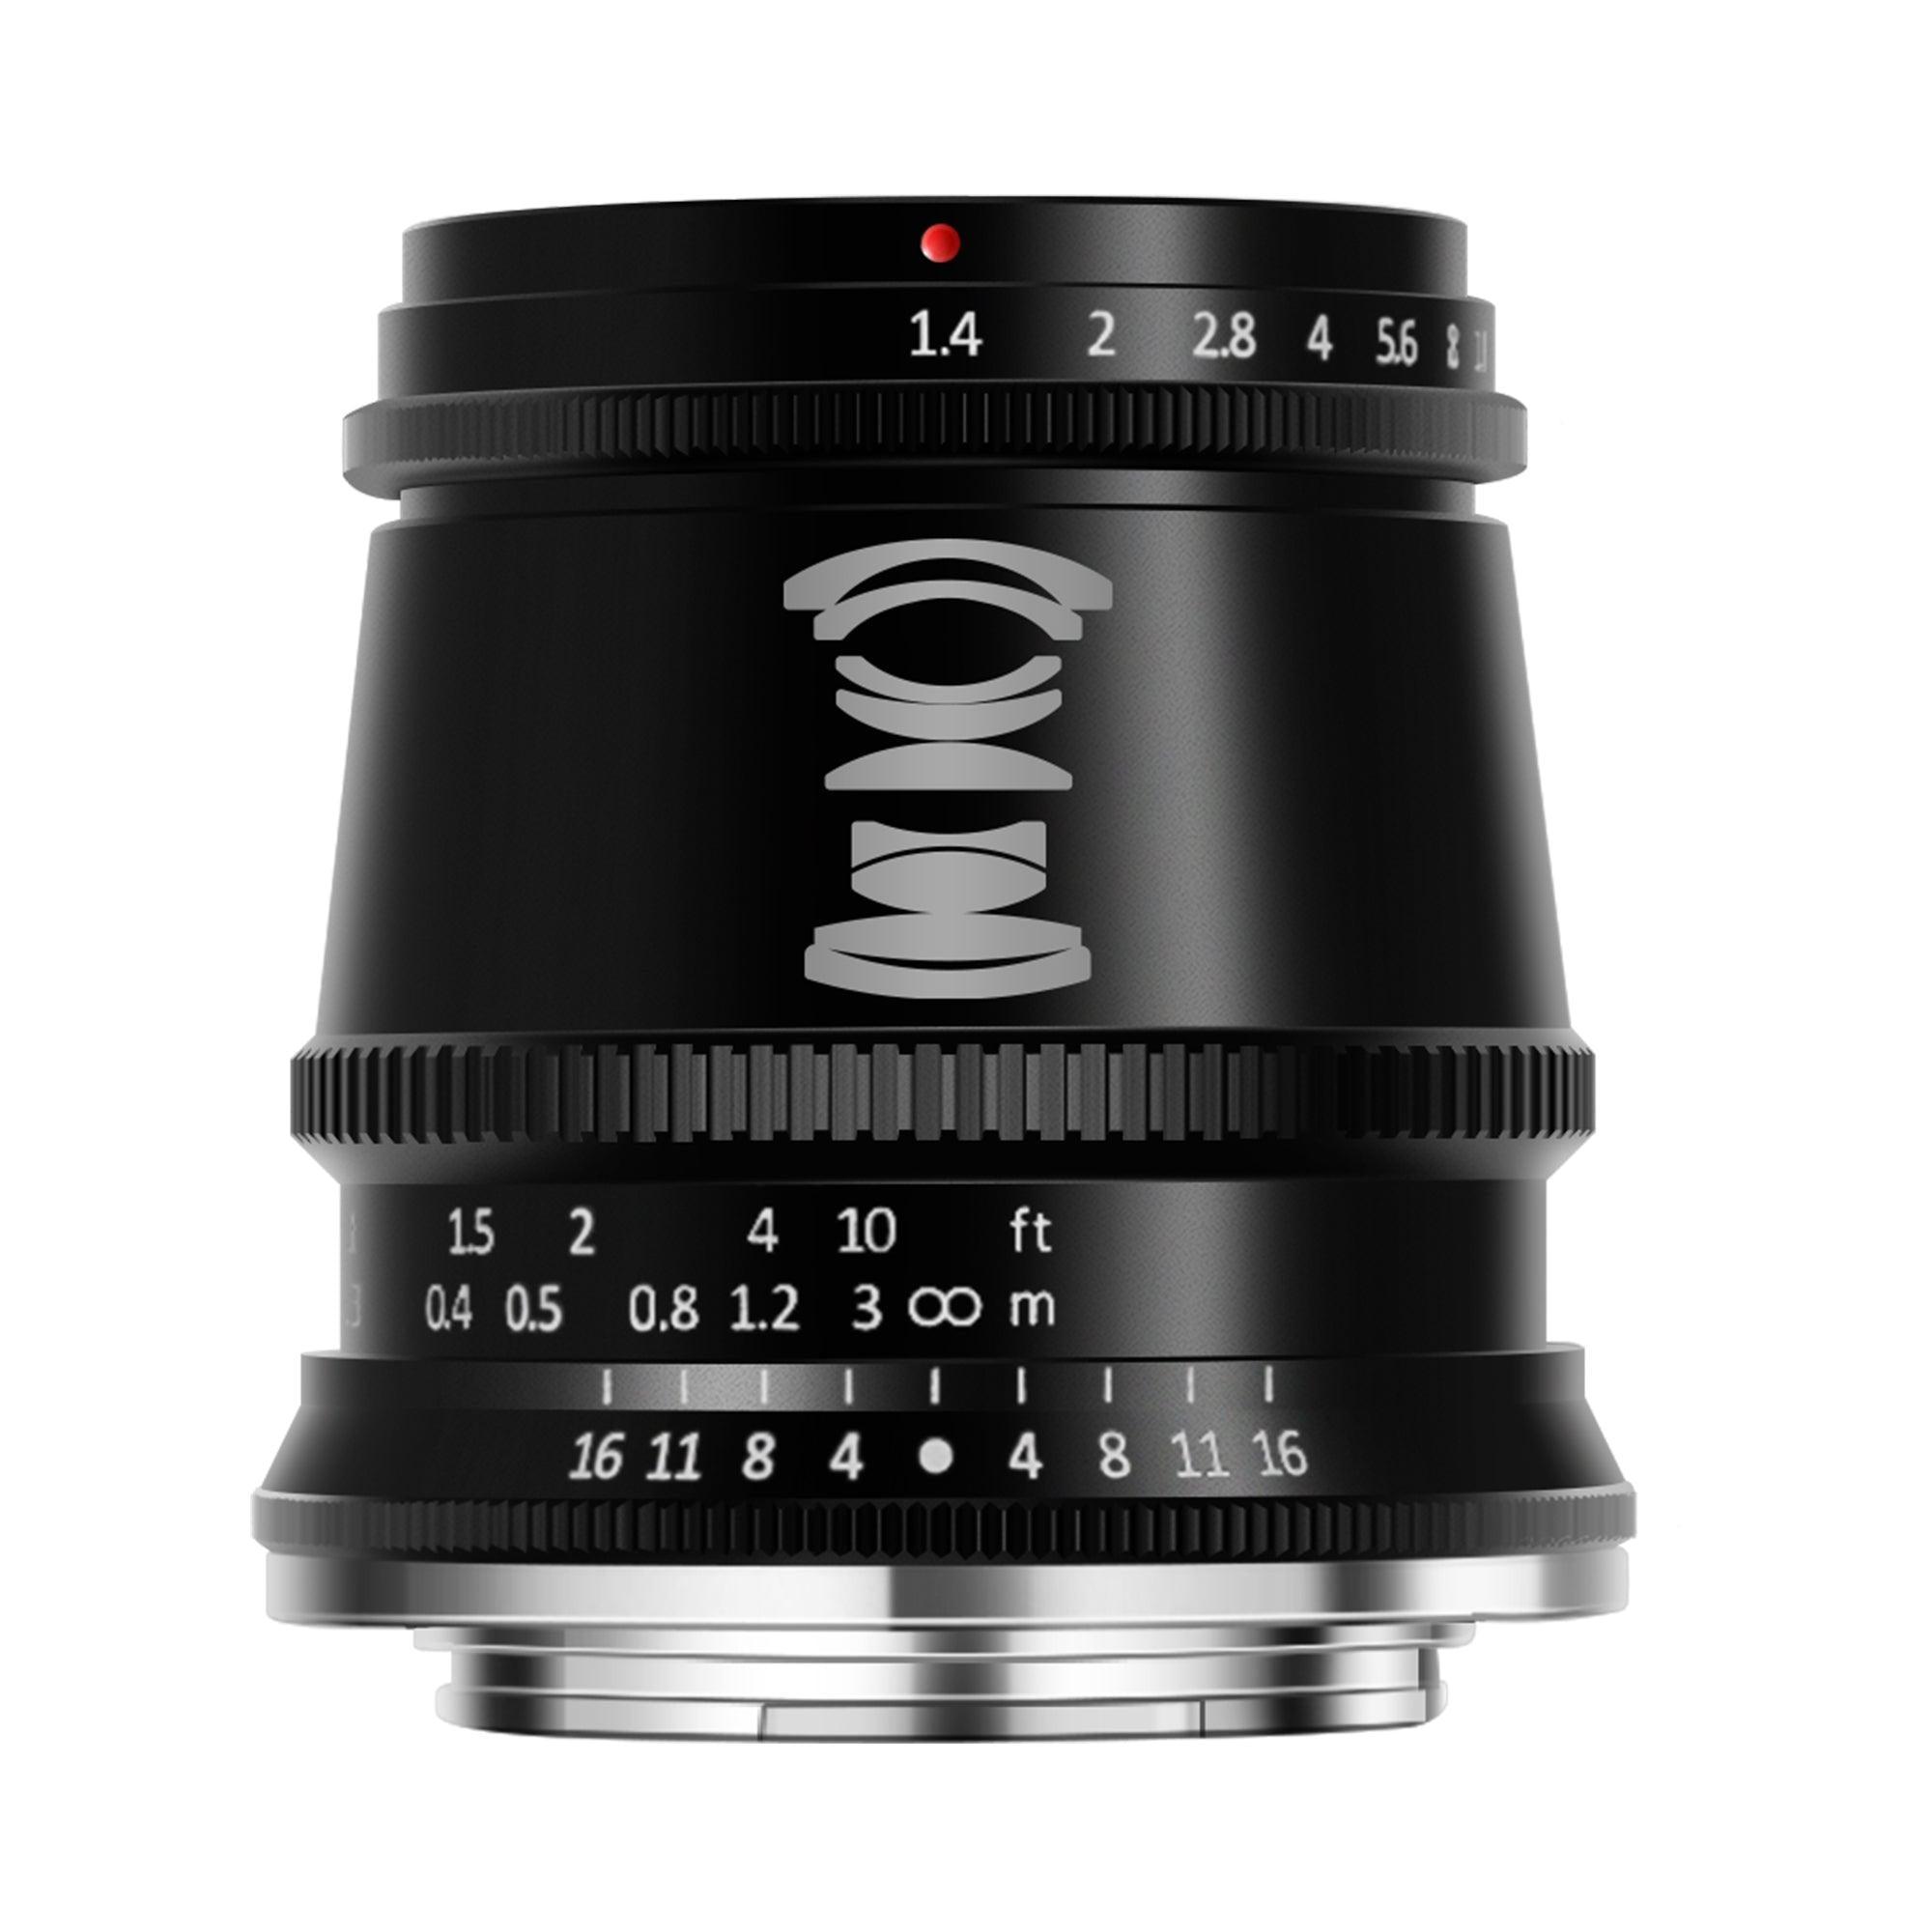 TTArtisan 17mm F1.4 Manual Focus APS-C Wide Angle Large Aperture Camera Lens